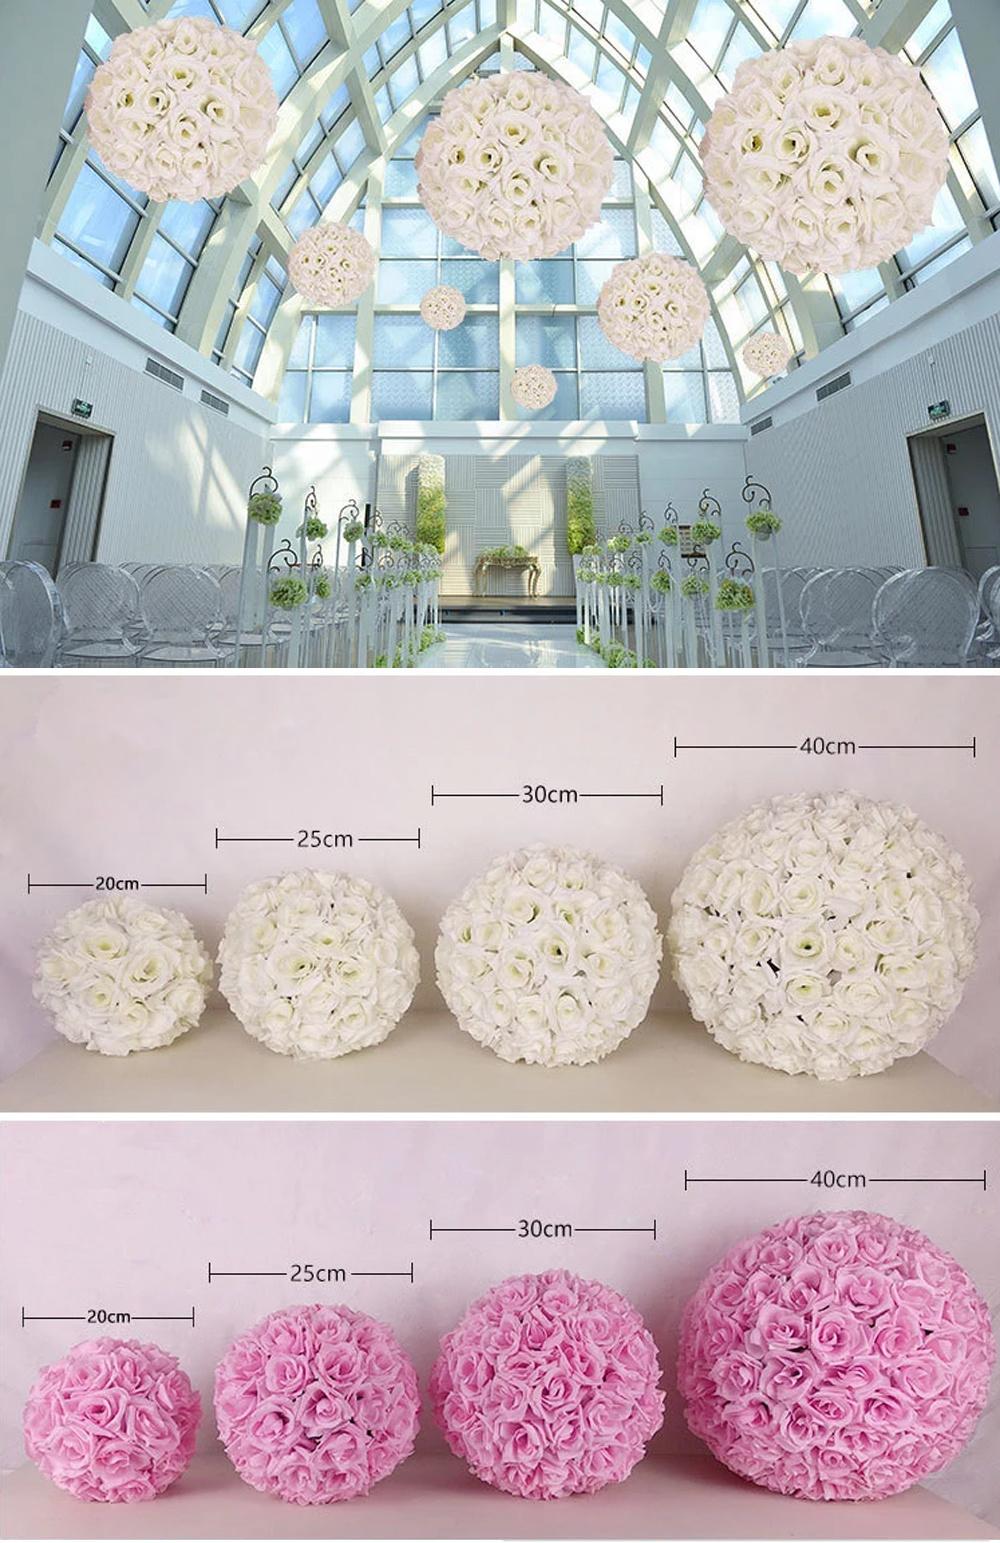 Potted Hydrangeas Wedding Flower Arch Flower Holder 5 Heads Dried Hydrangea Ball for Wedding Table Artificial Flowers